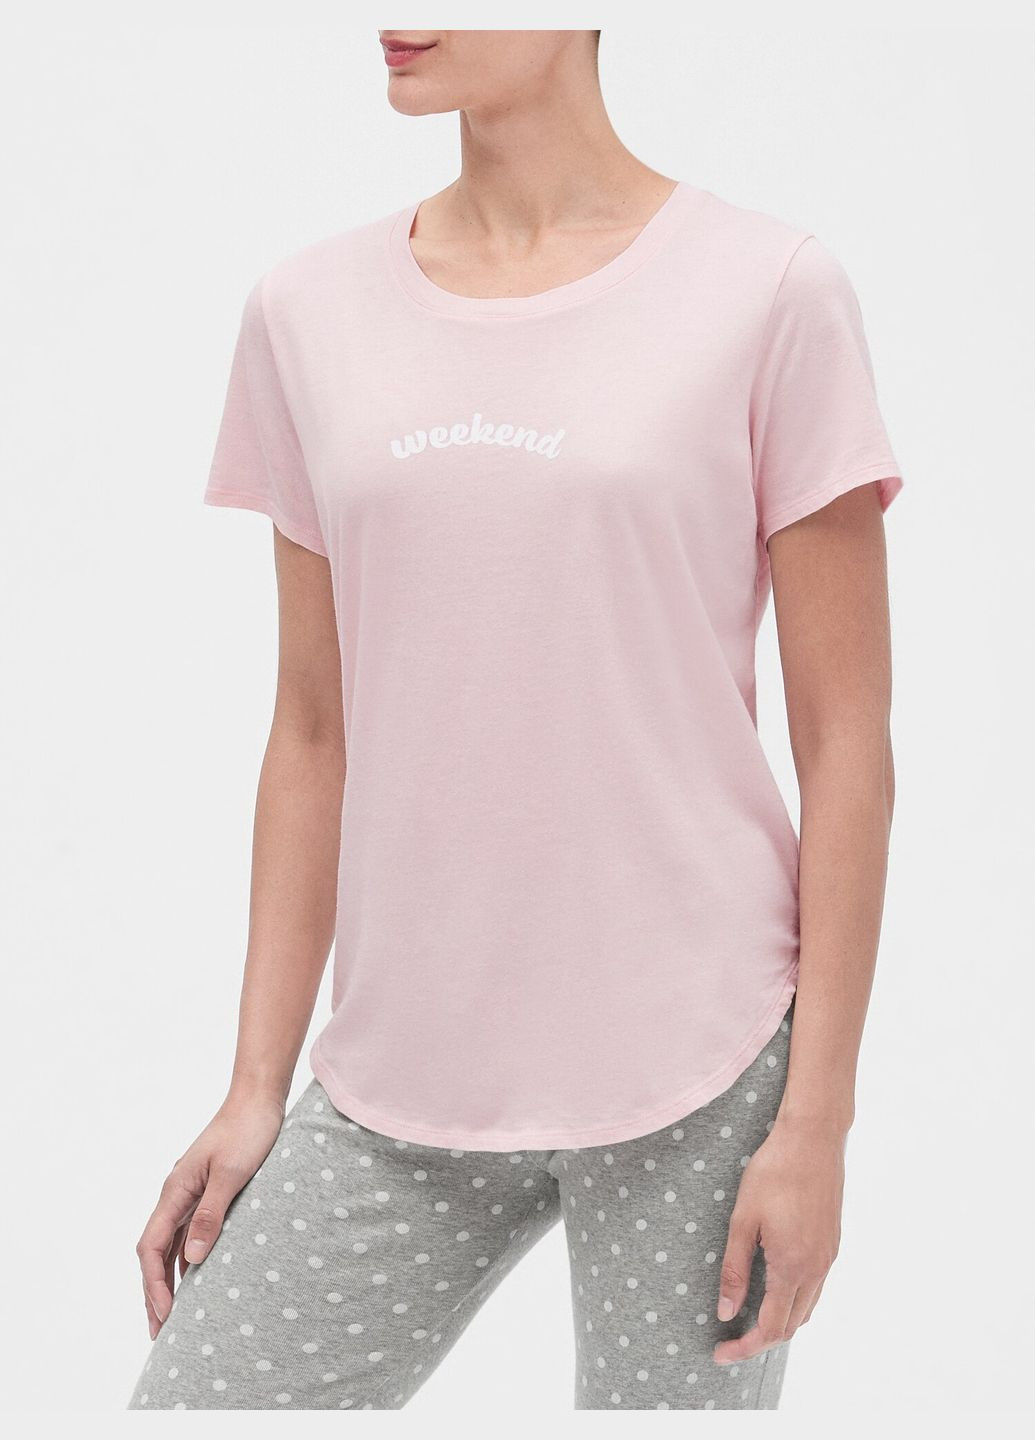 Светло-розовая летняя футболка ga0613w Gap